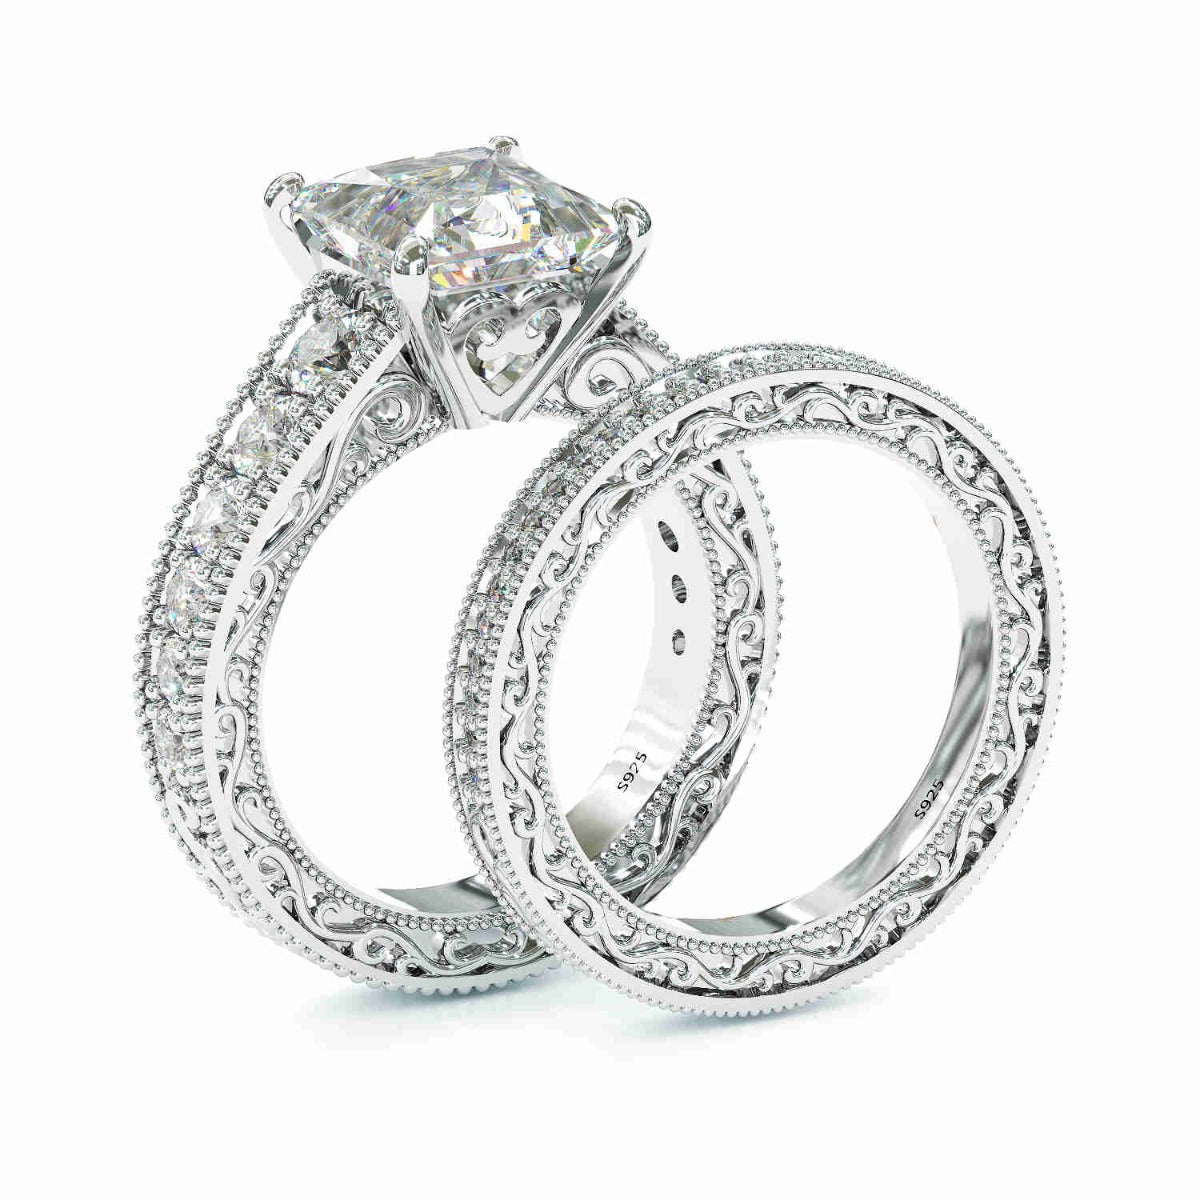 Jorrio handmade princess cut sterling silver classic wedding ring bridal set